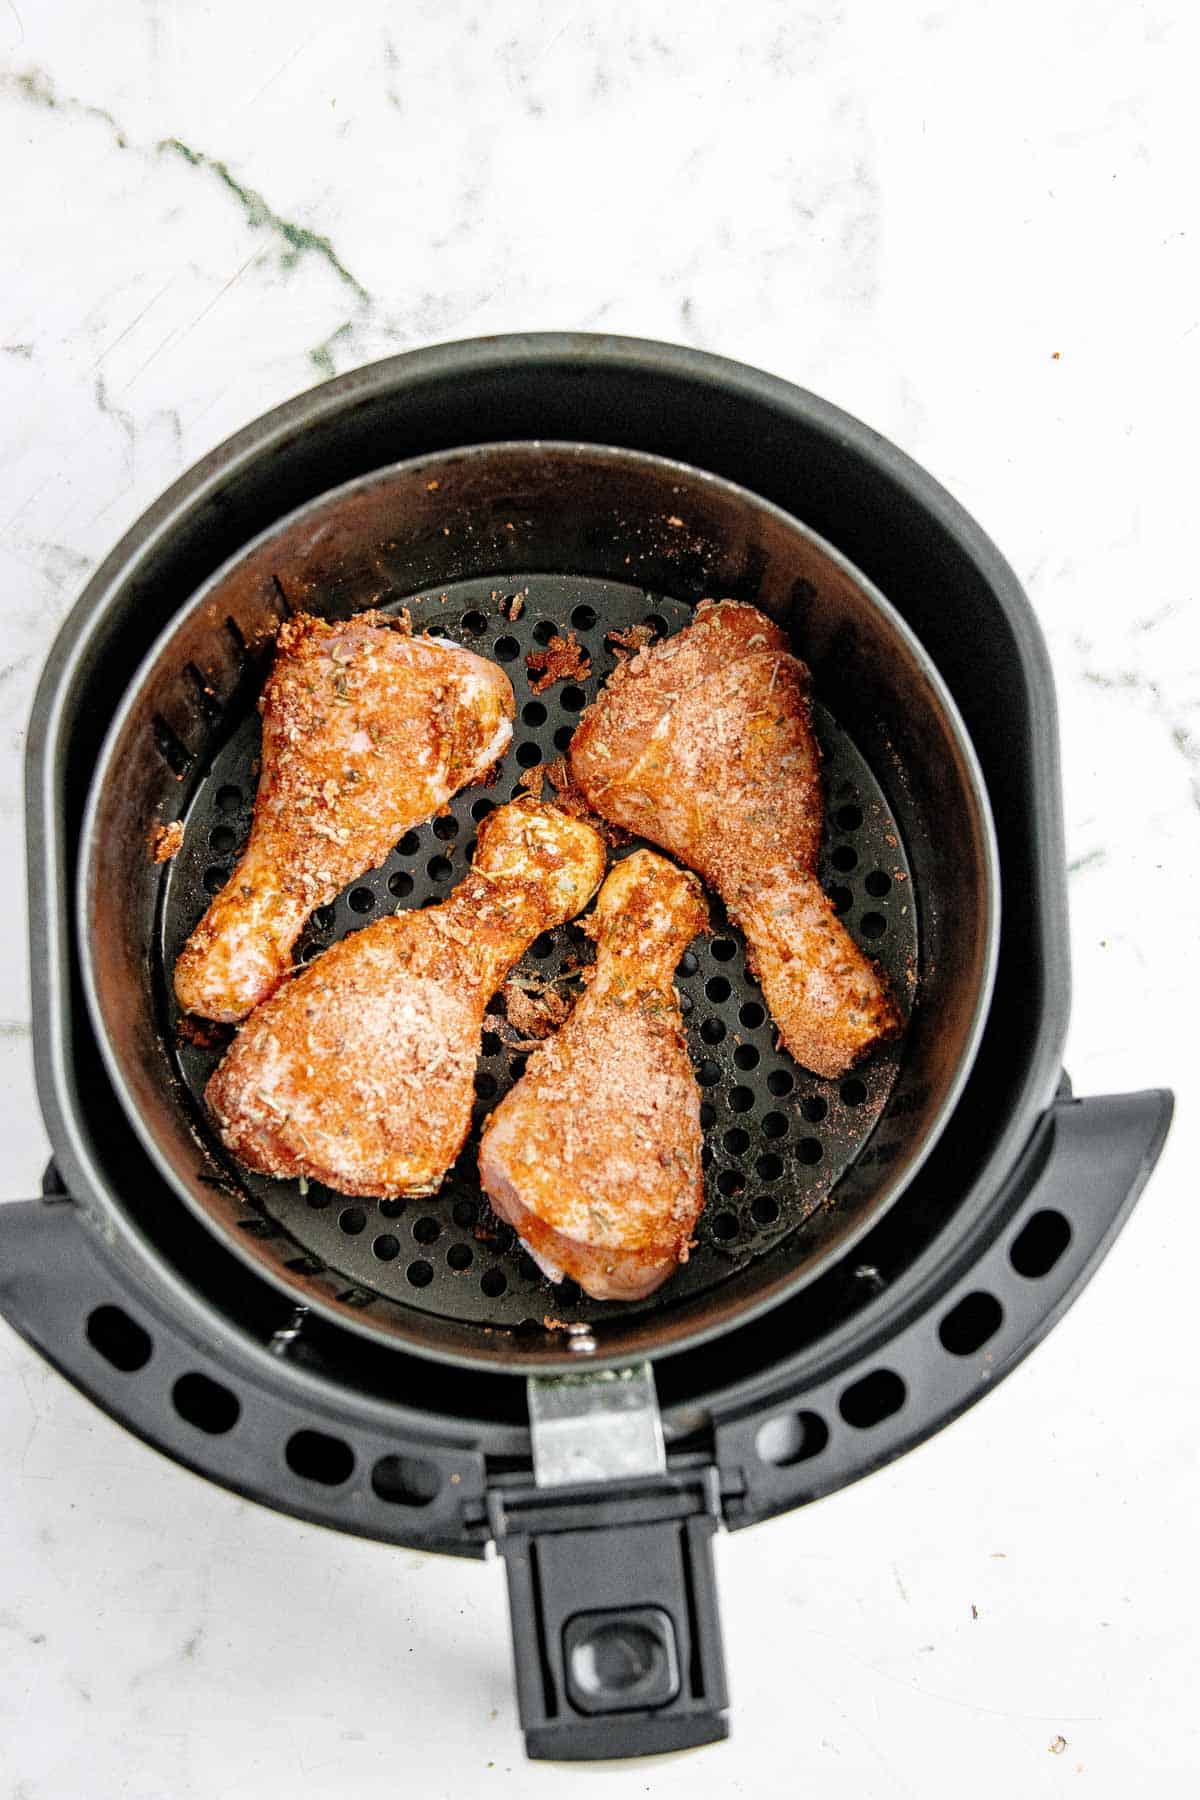 Seasoned chicken in the air fryer.